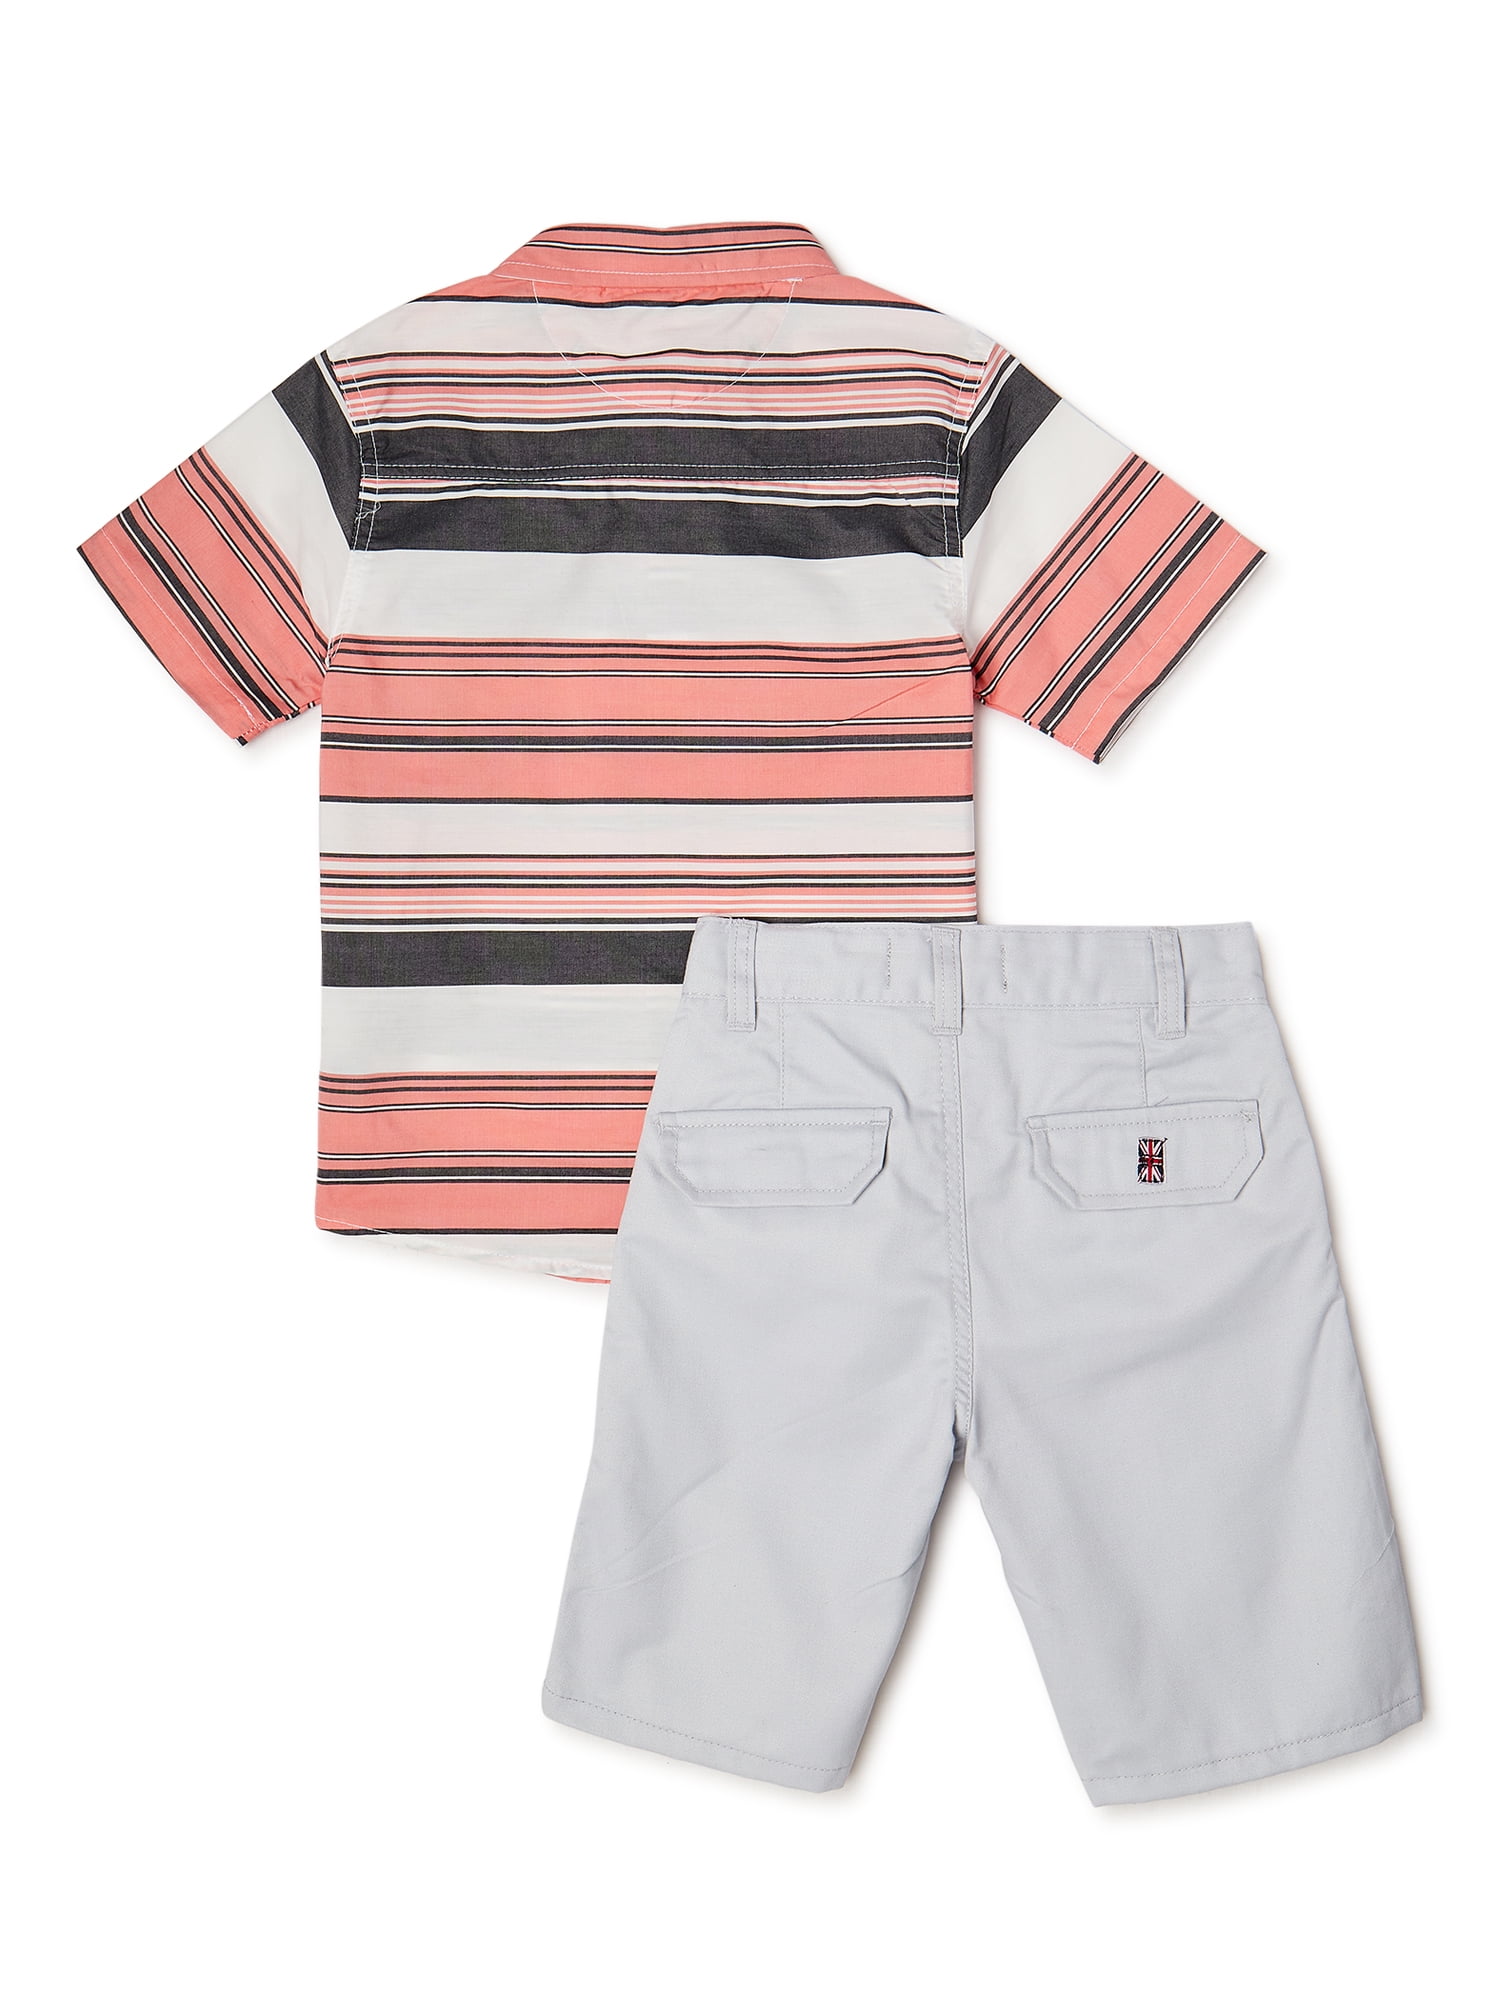 English Laundry Boys Sleeve Striped Woven Shirt and Short Set